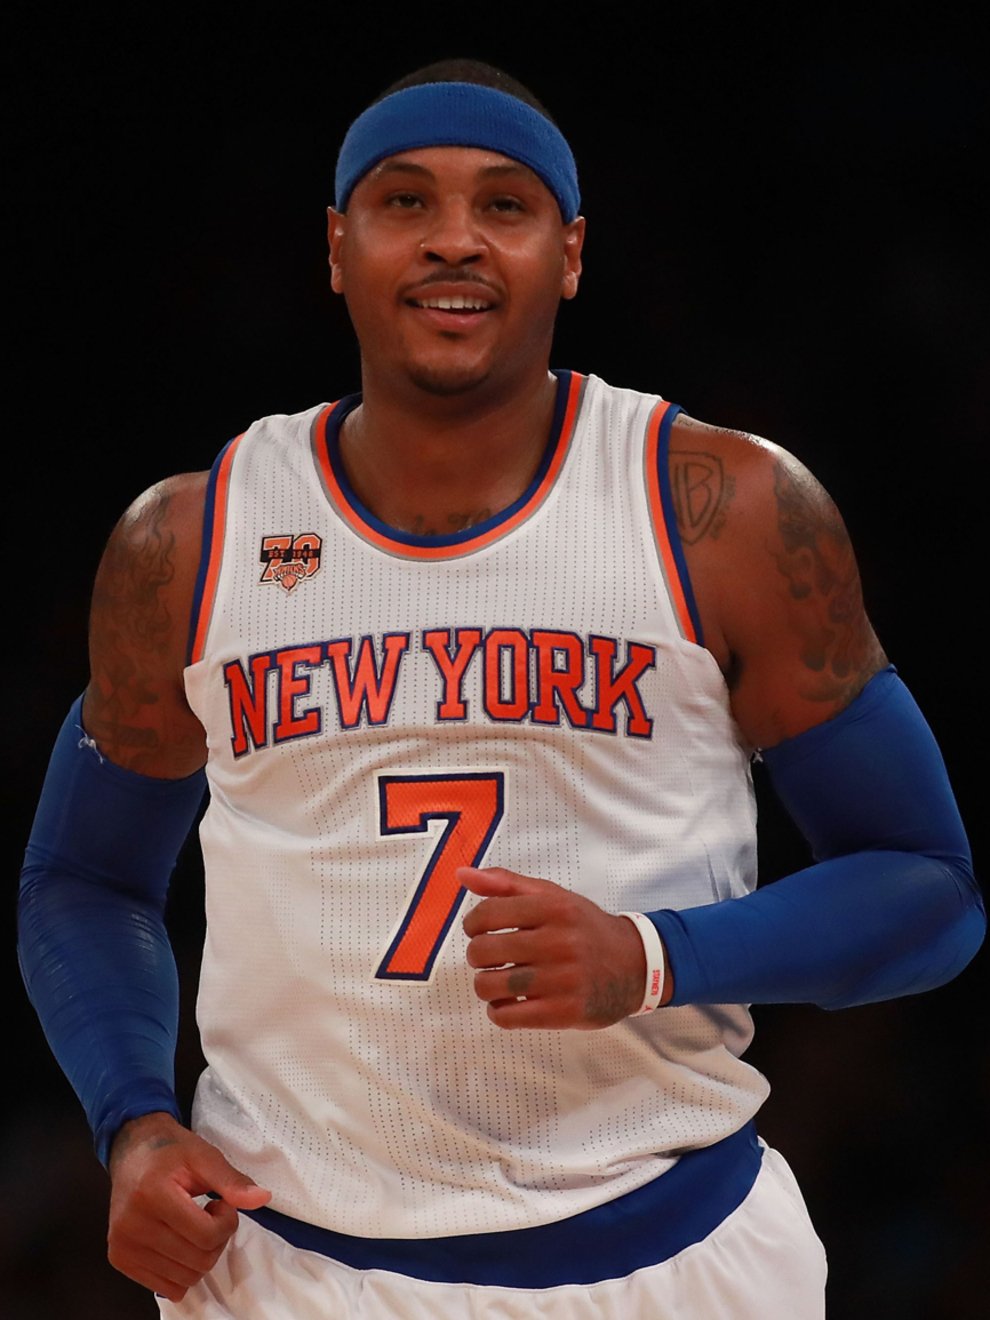 9. Carmelo Anthony, New York Knicks